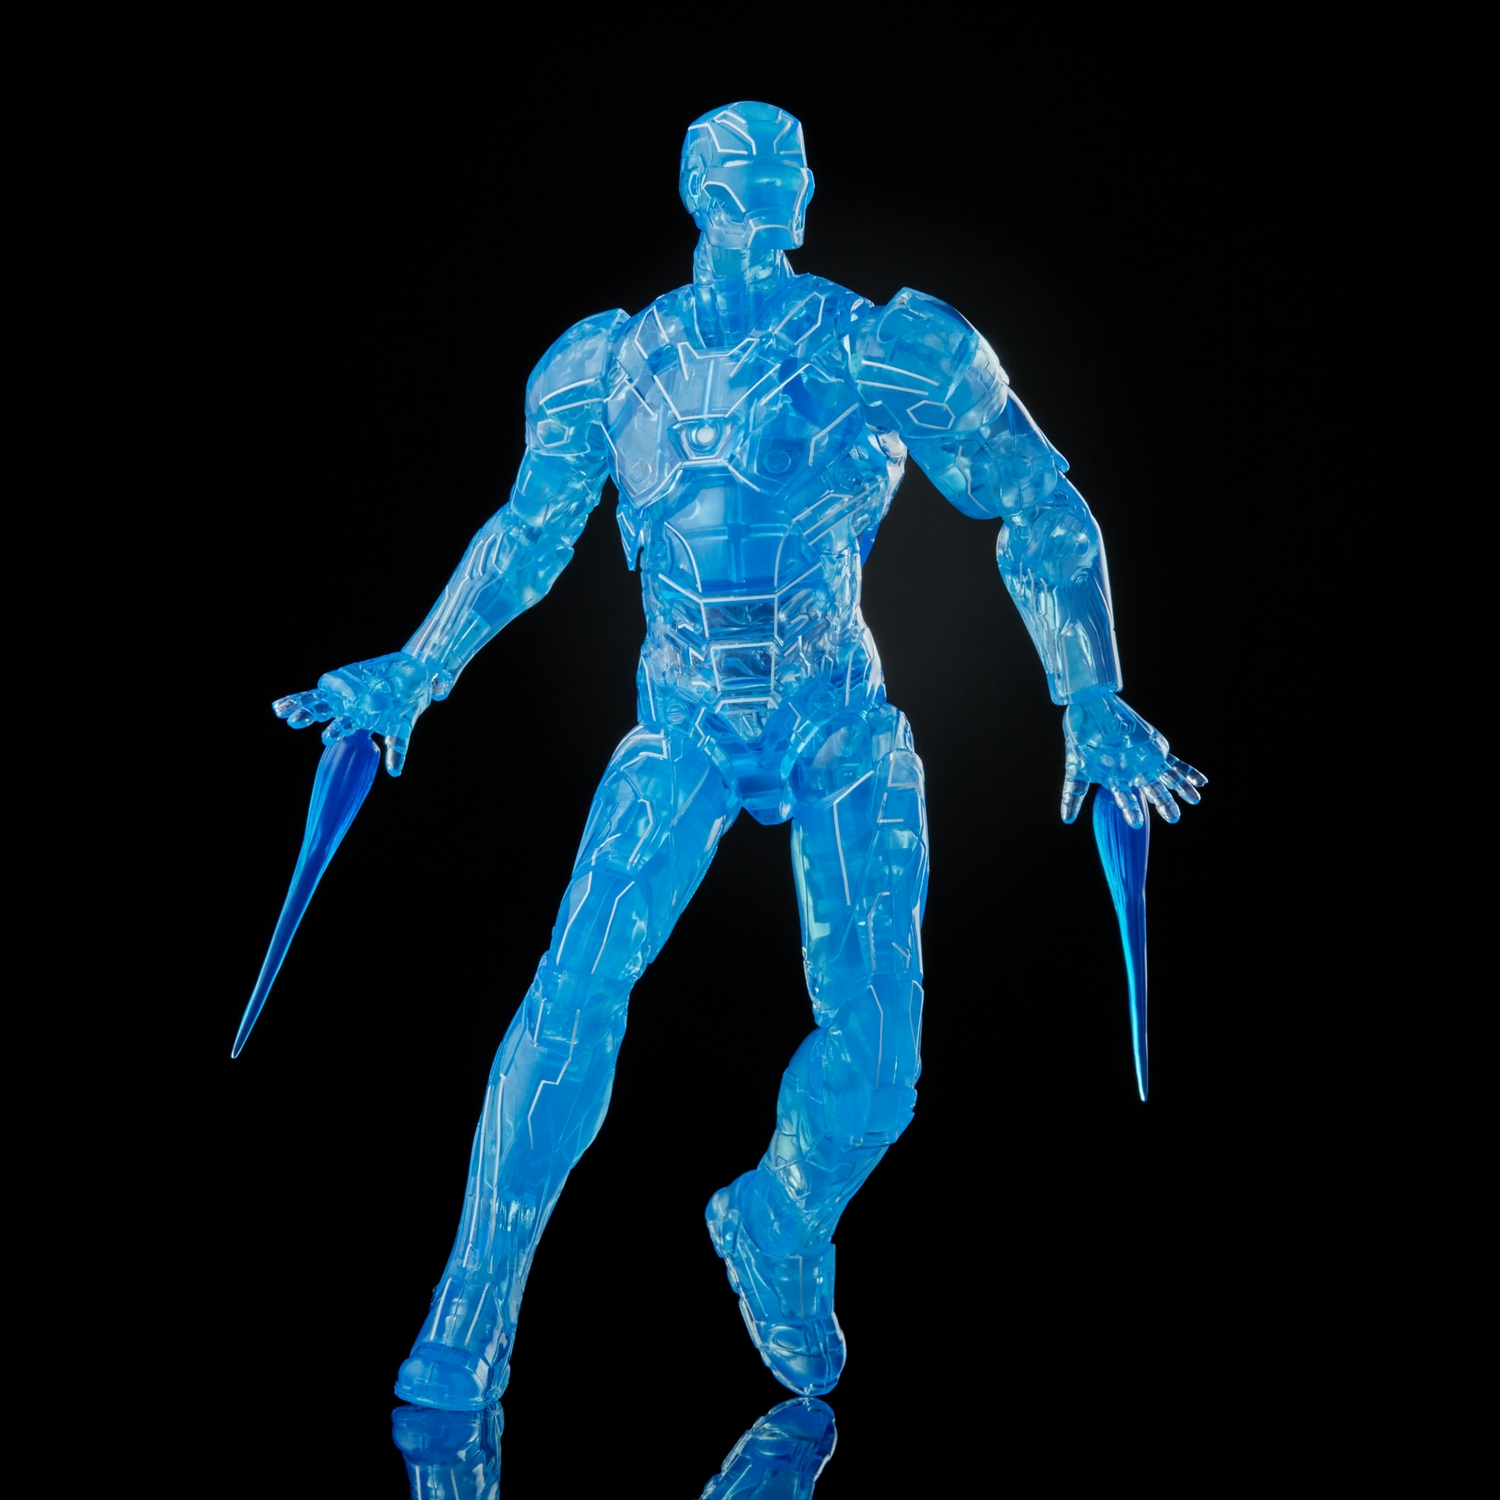 MARVEL LEGENDS SERIES 6-INCH IRON MAN Figure Assortment - Hologram Iron Man - oop (6).jpg